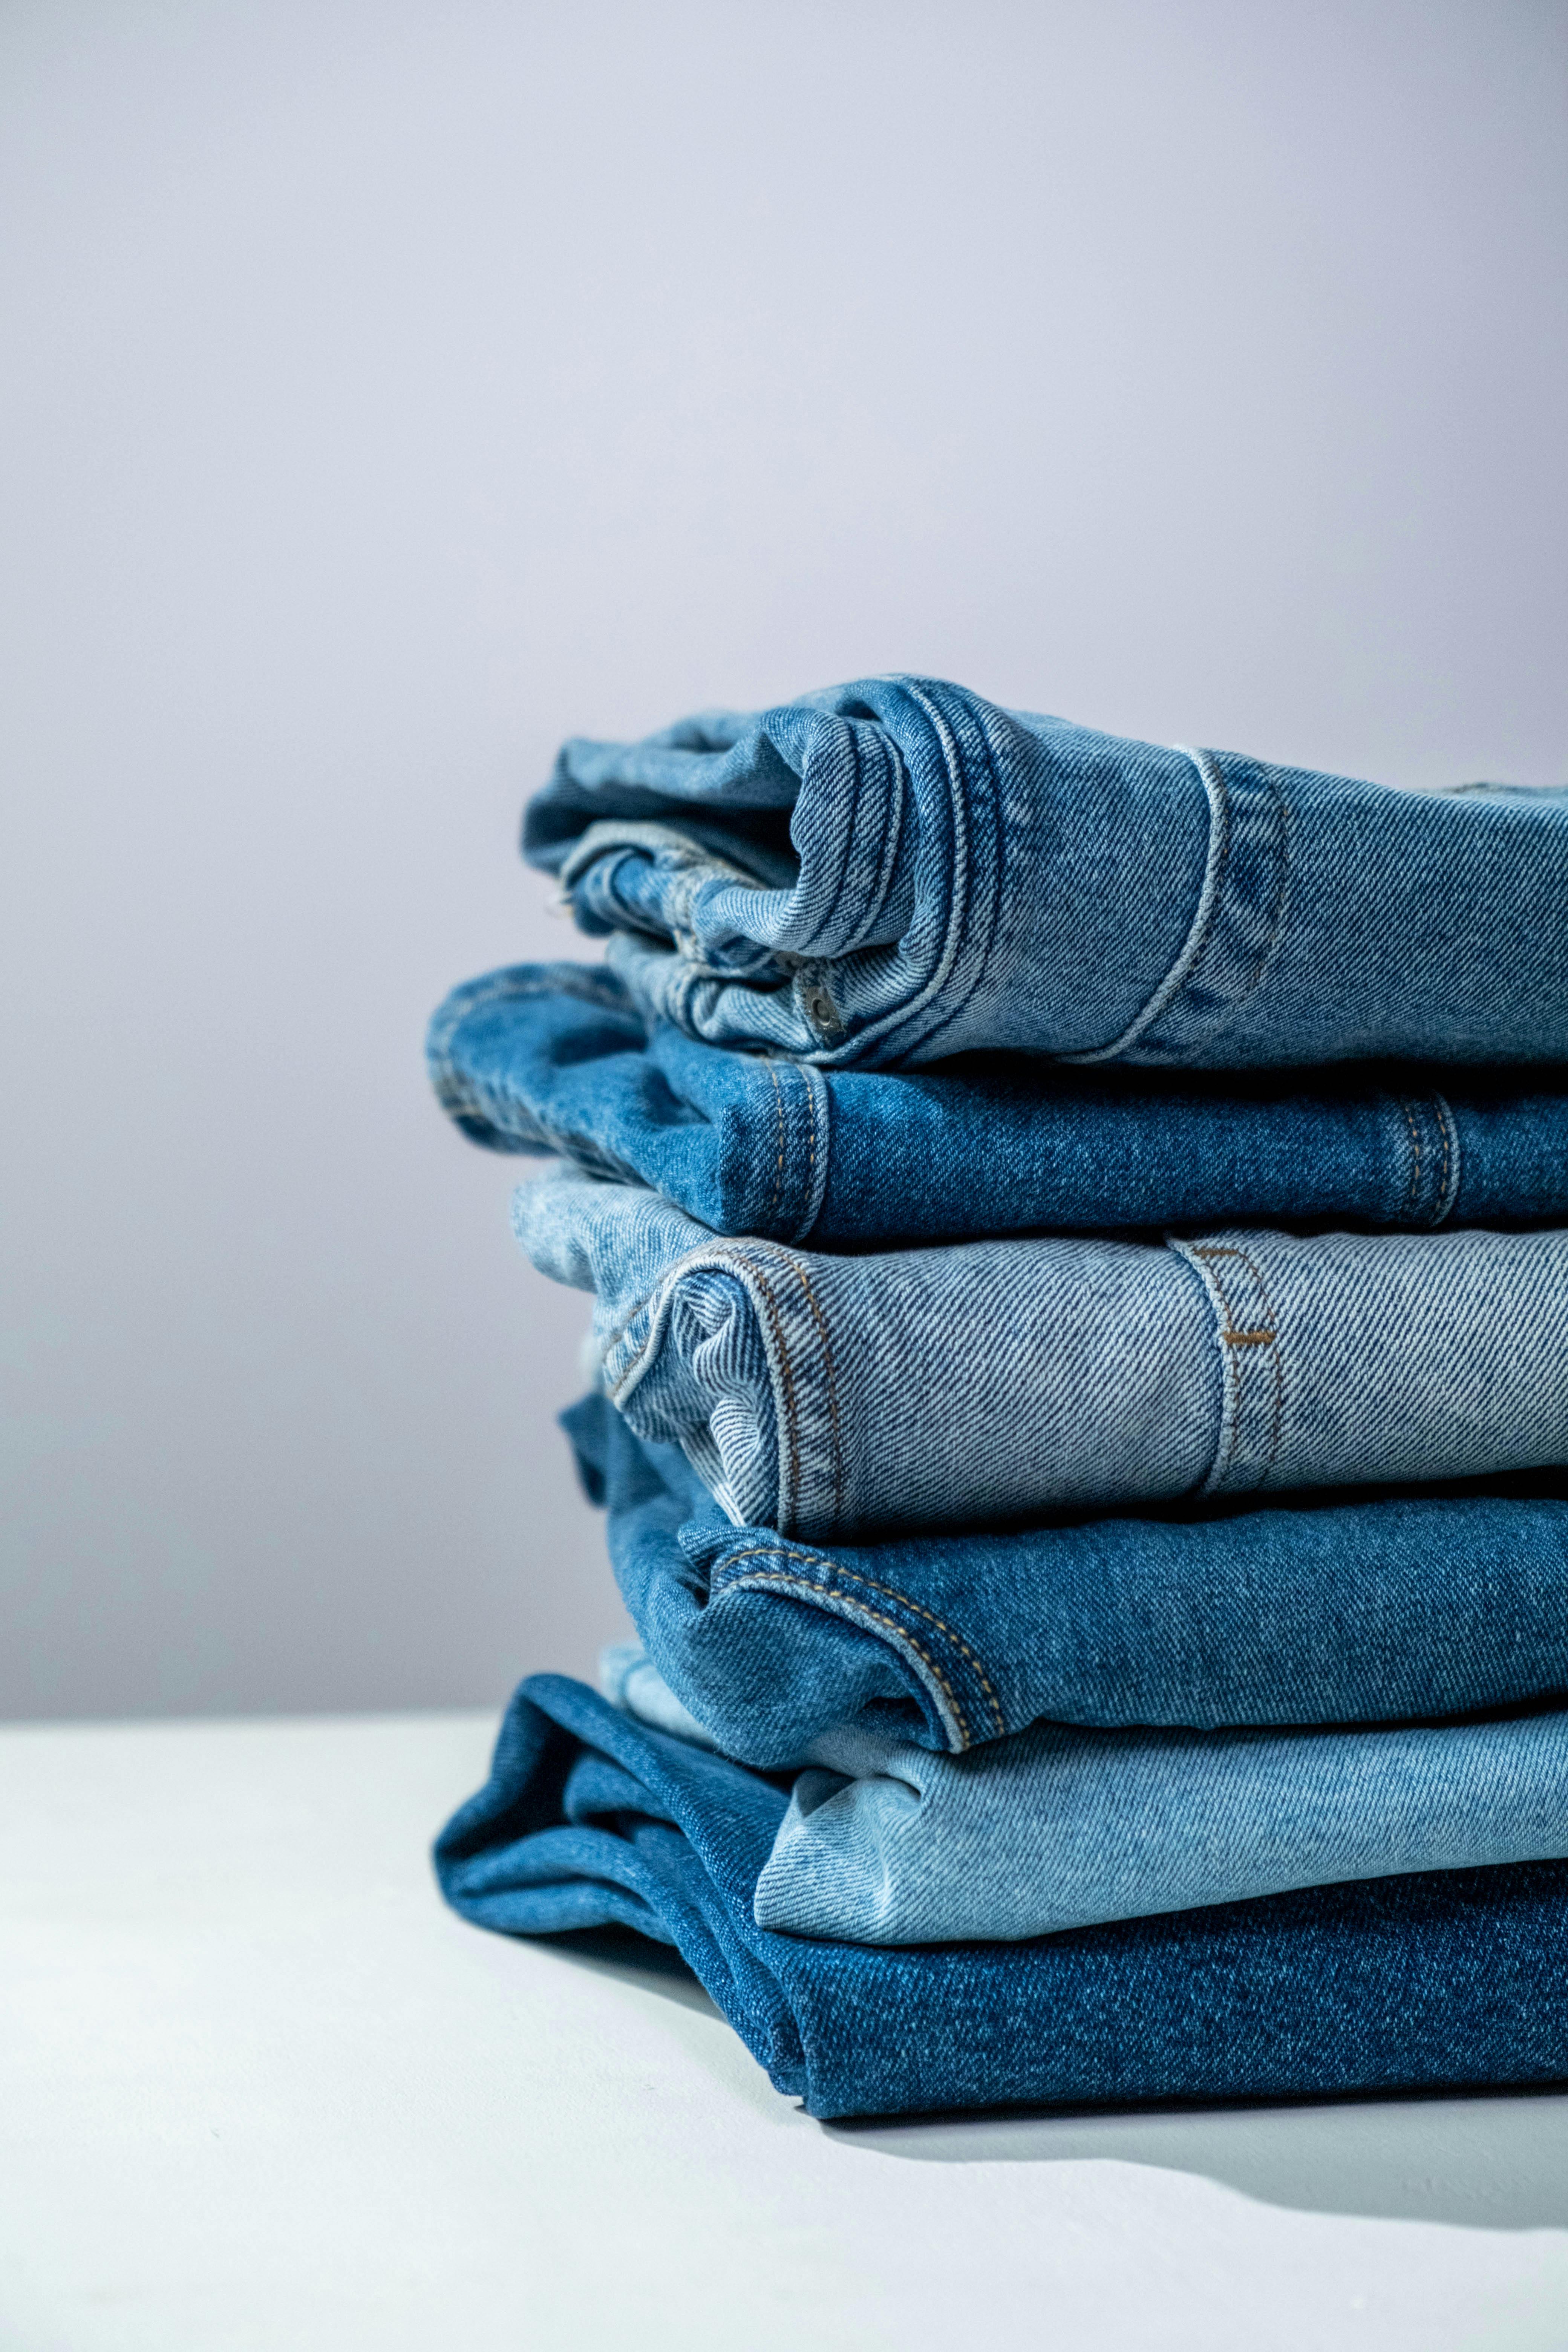 Pile of Denim Blue Jeans · Free Stock Photo